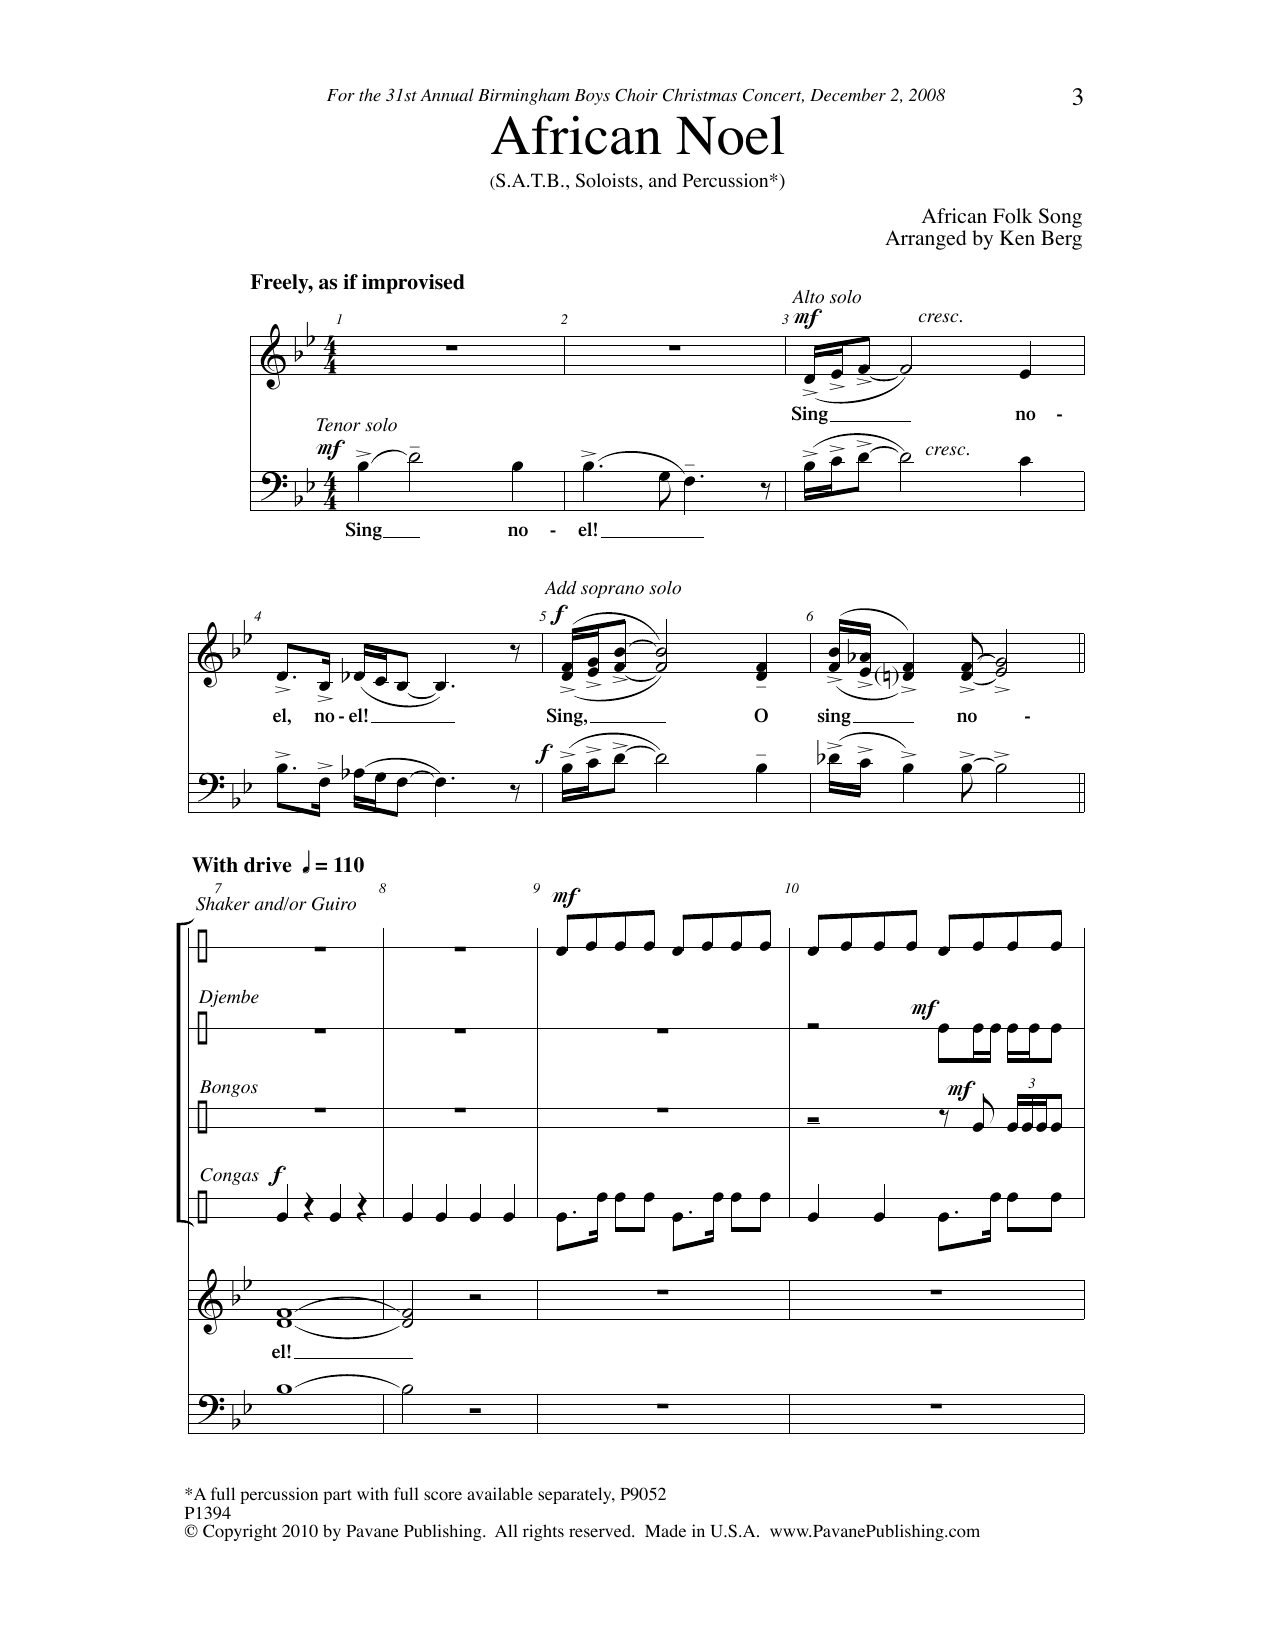 African Folk Song African Noel (arr. Ken Berg) Sheet Music Notes & Chords for SATB Choir - Download or Print PDF